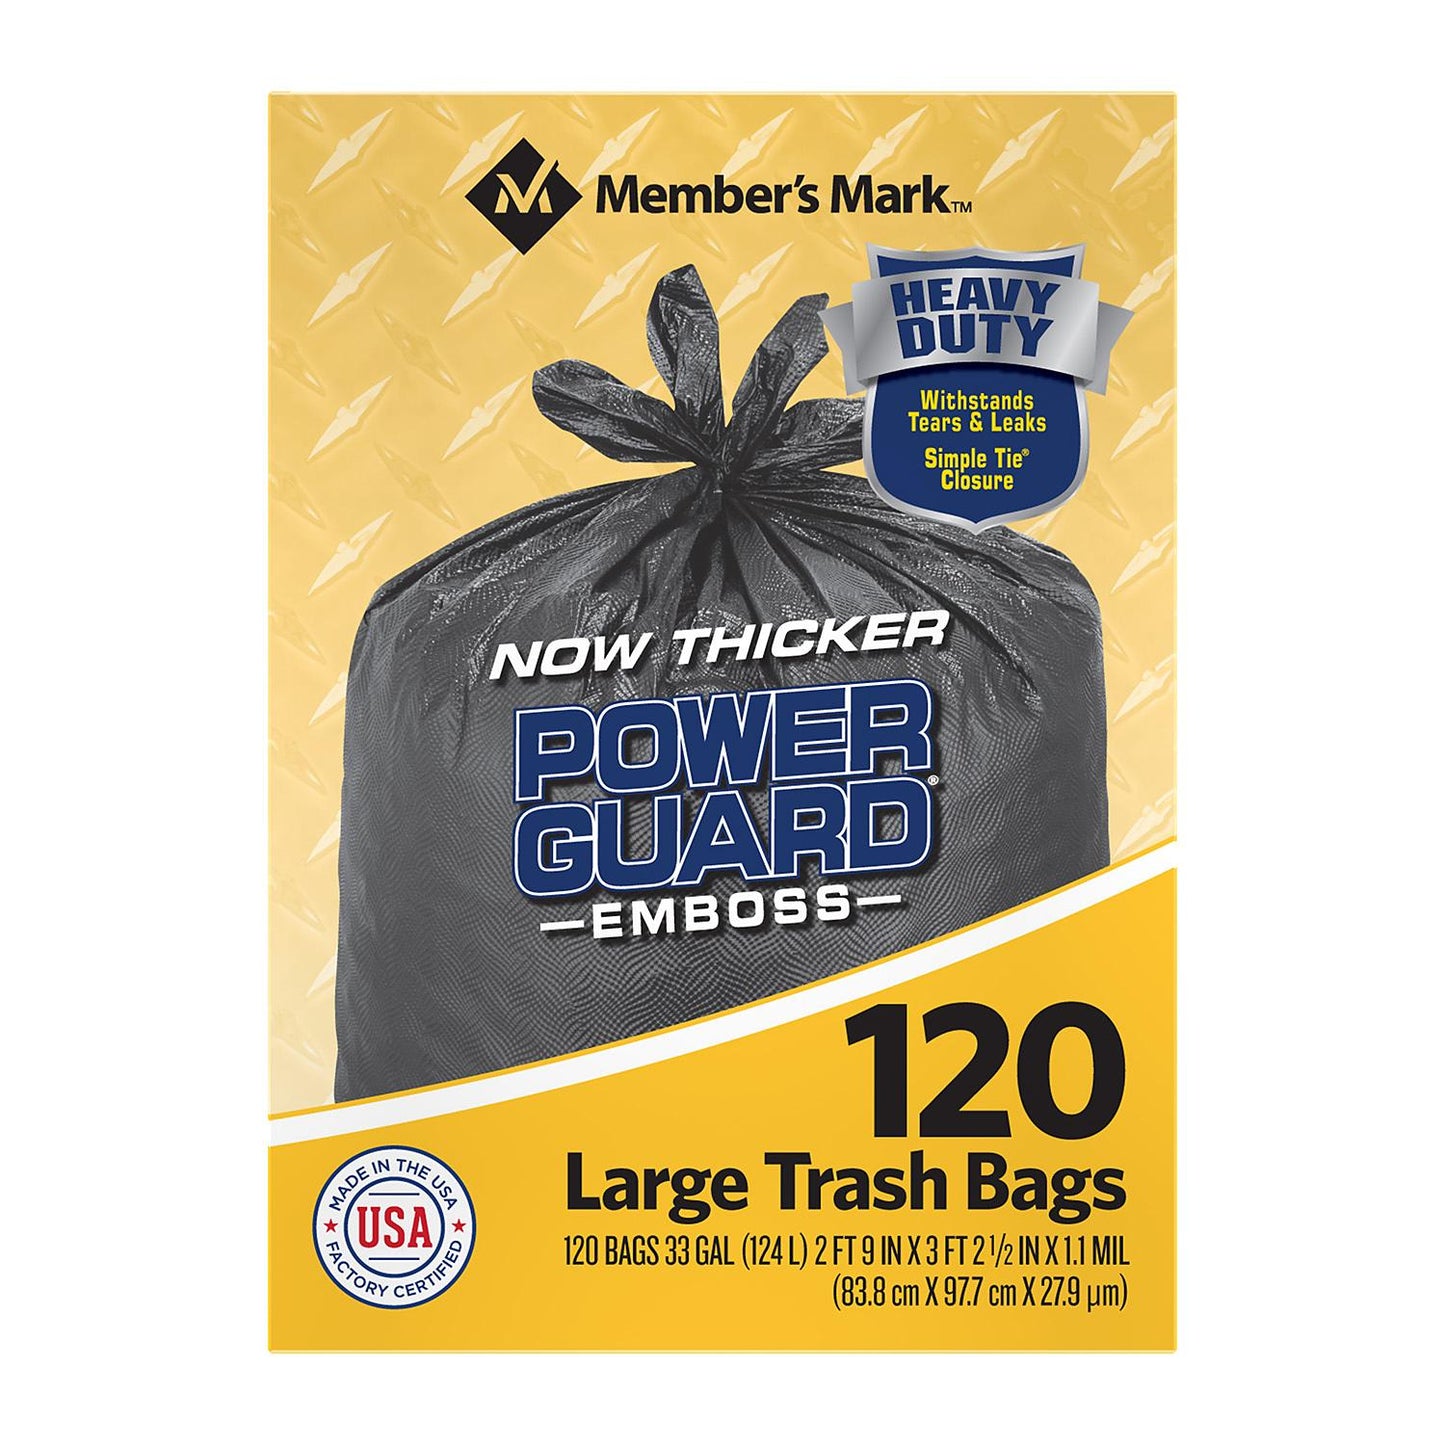 Various Brands Twist Tie Heavy Duty 33 Gallon Trash Bags, 40 Count | Rural King